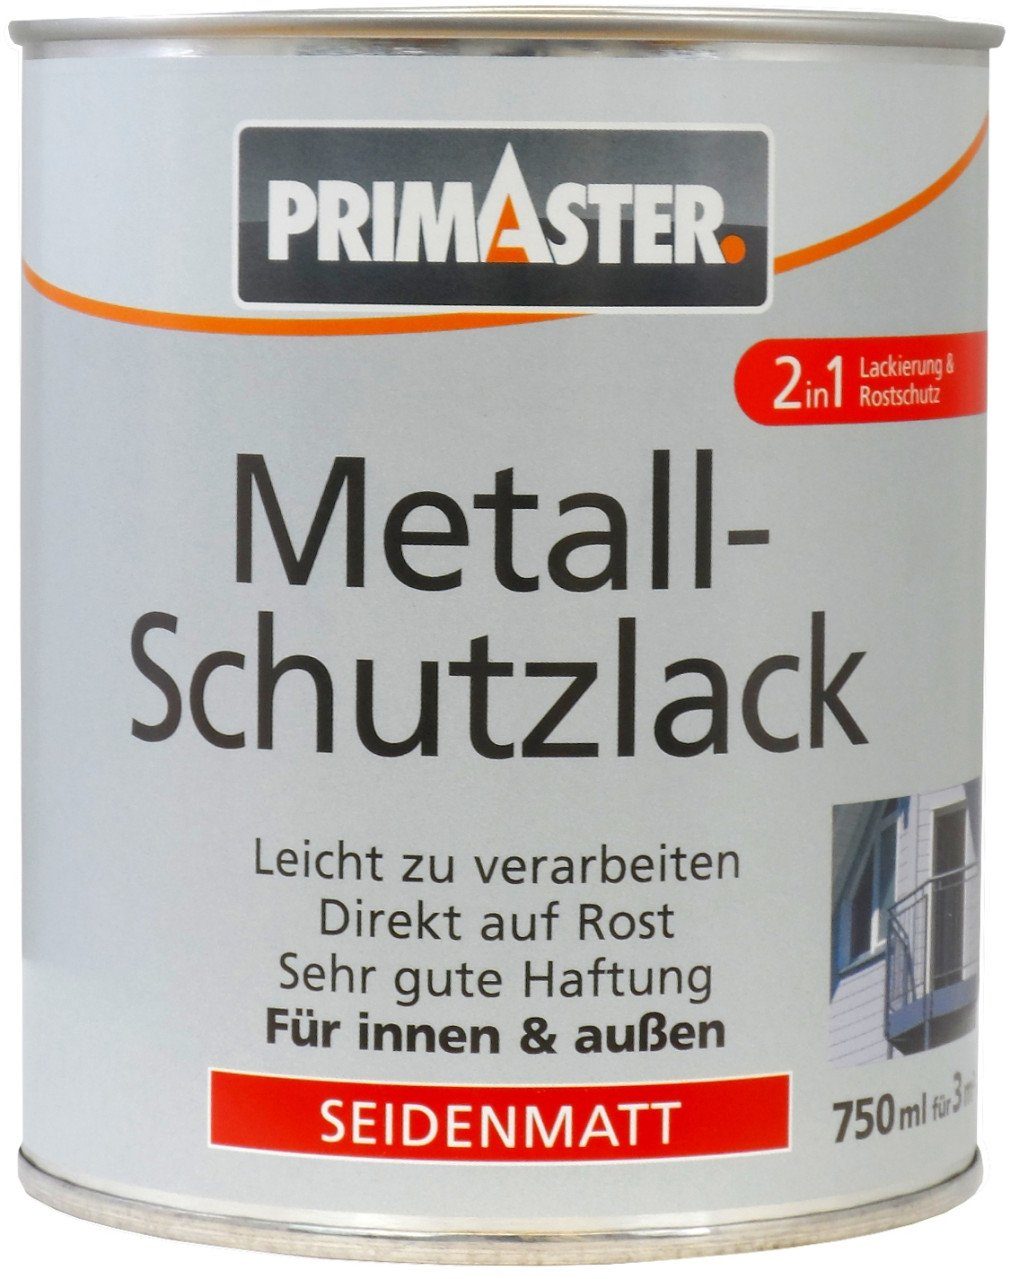 Metallschutzlack ml 7016 750 Metall-Schutzlack Primaster RAL Primaster